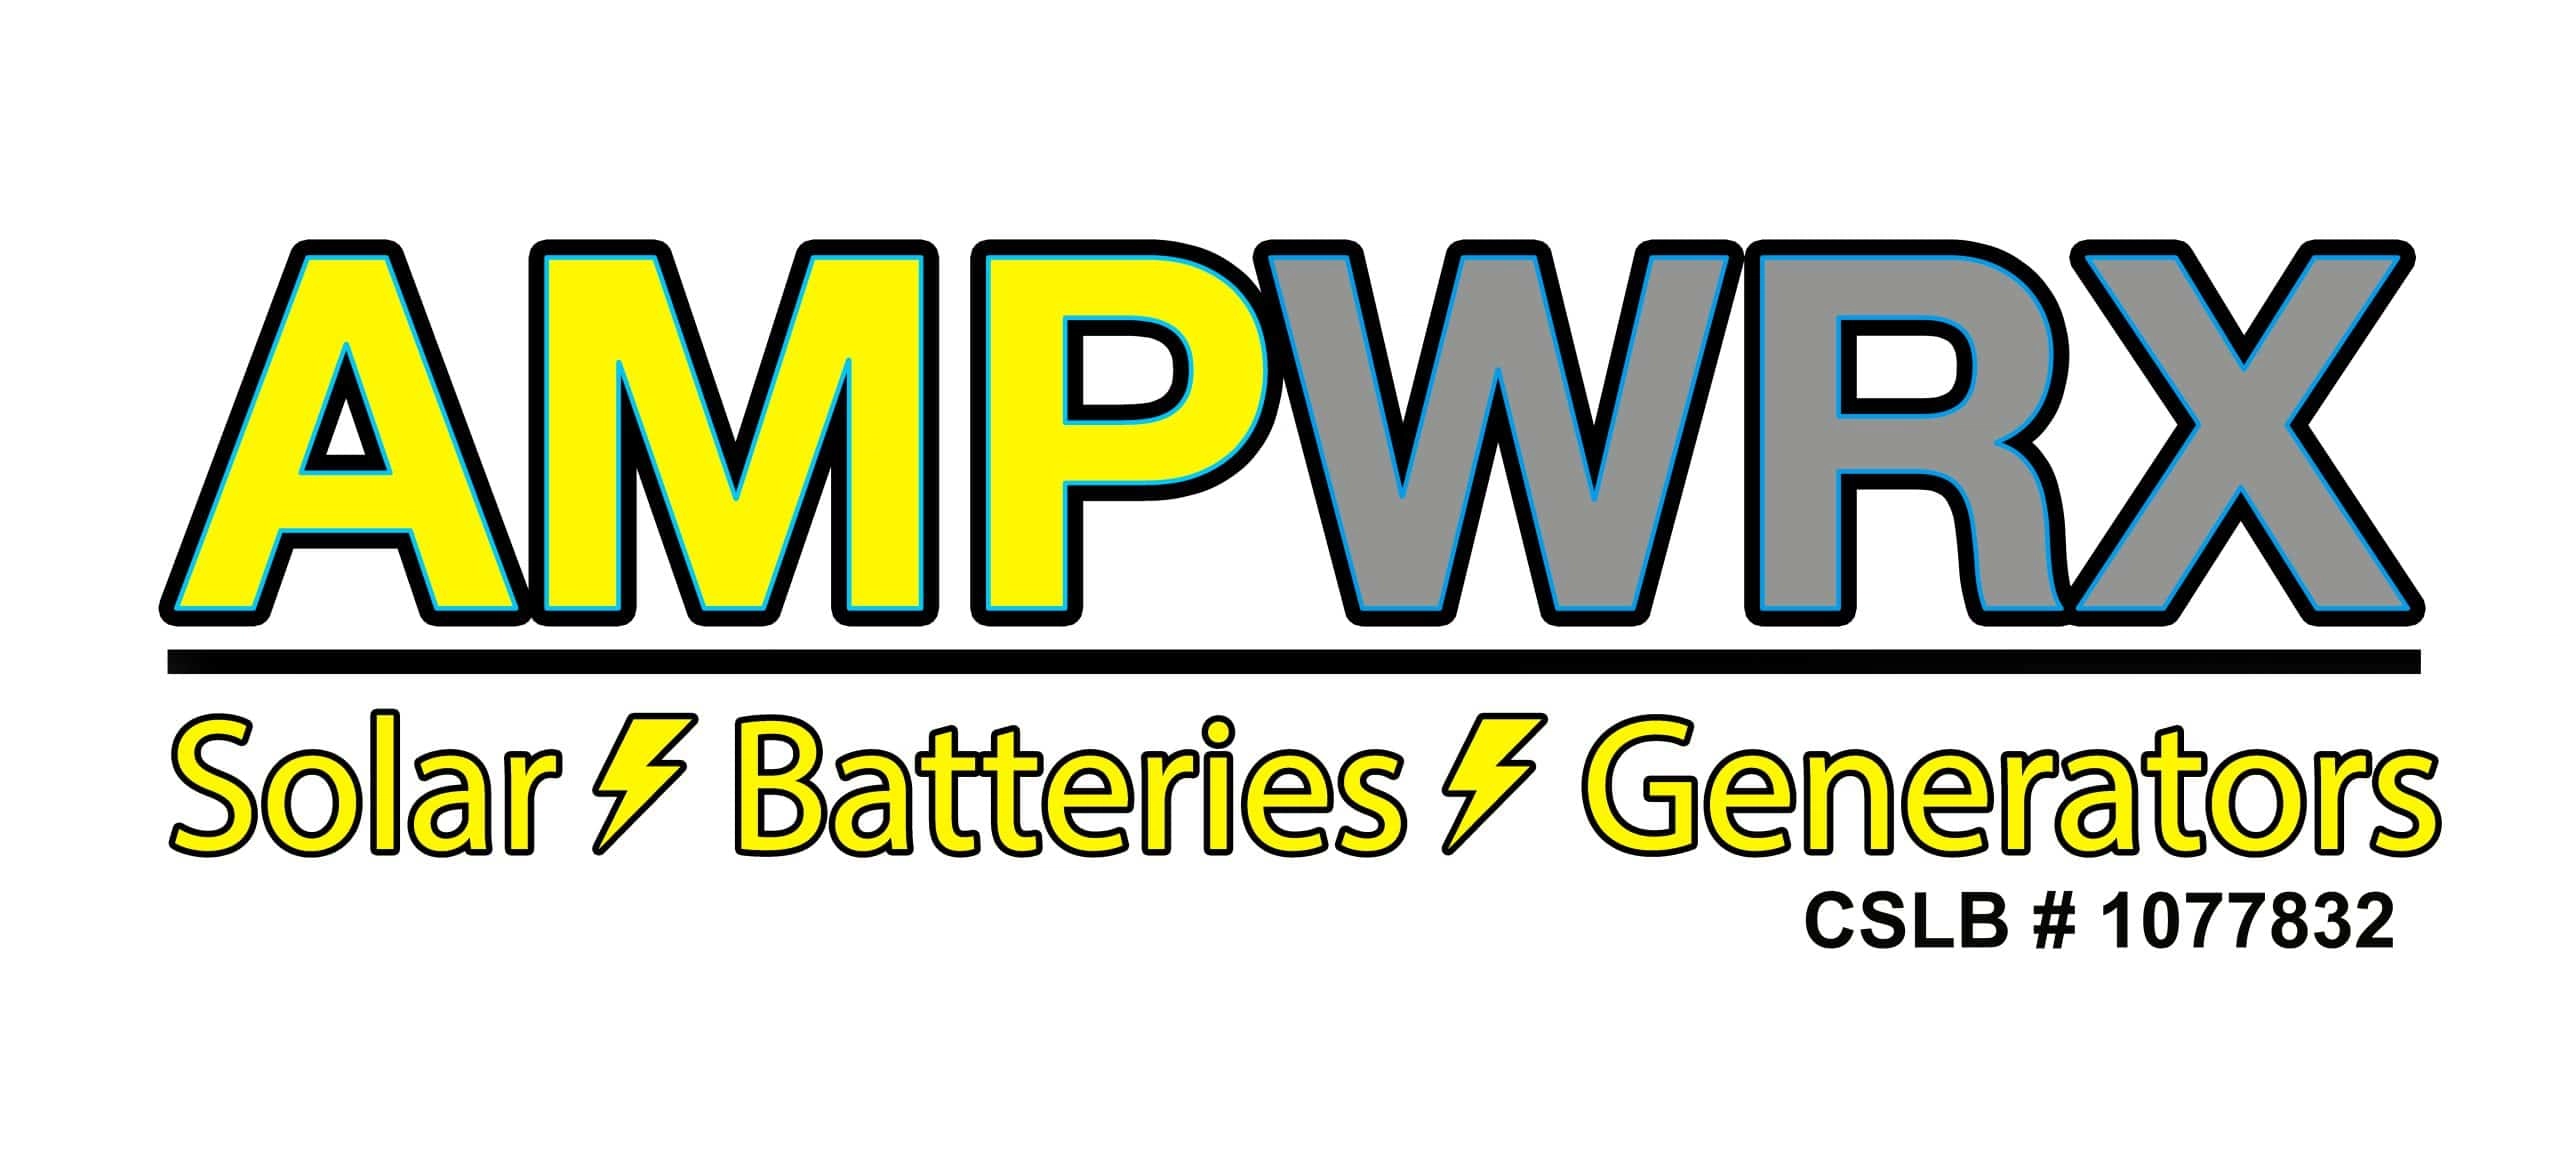 AMPWRX Solar Solutions Logo